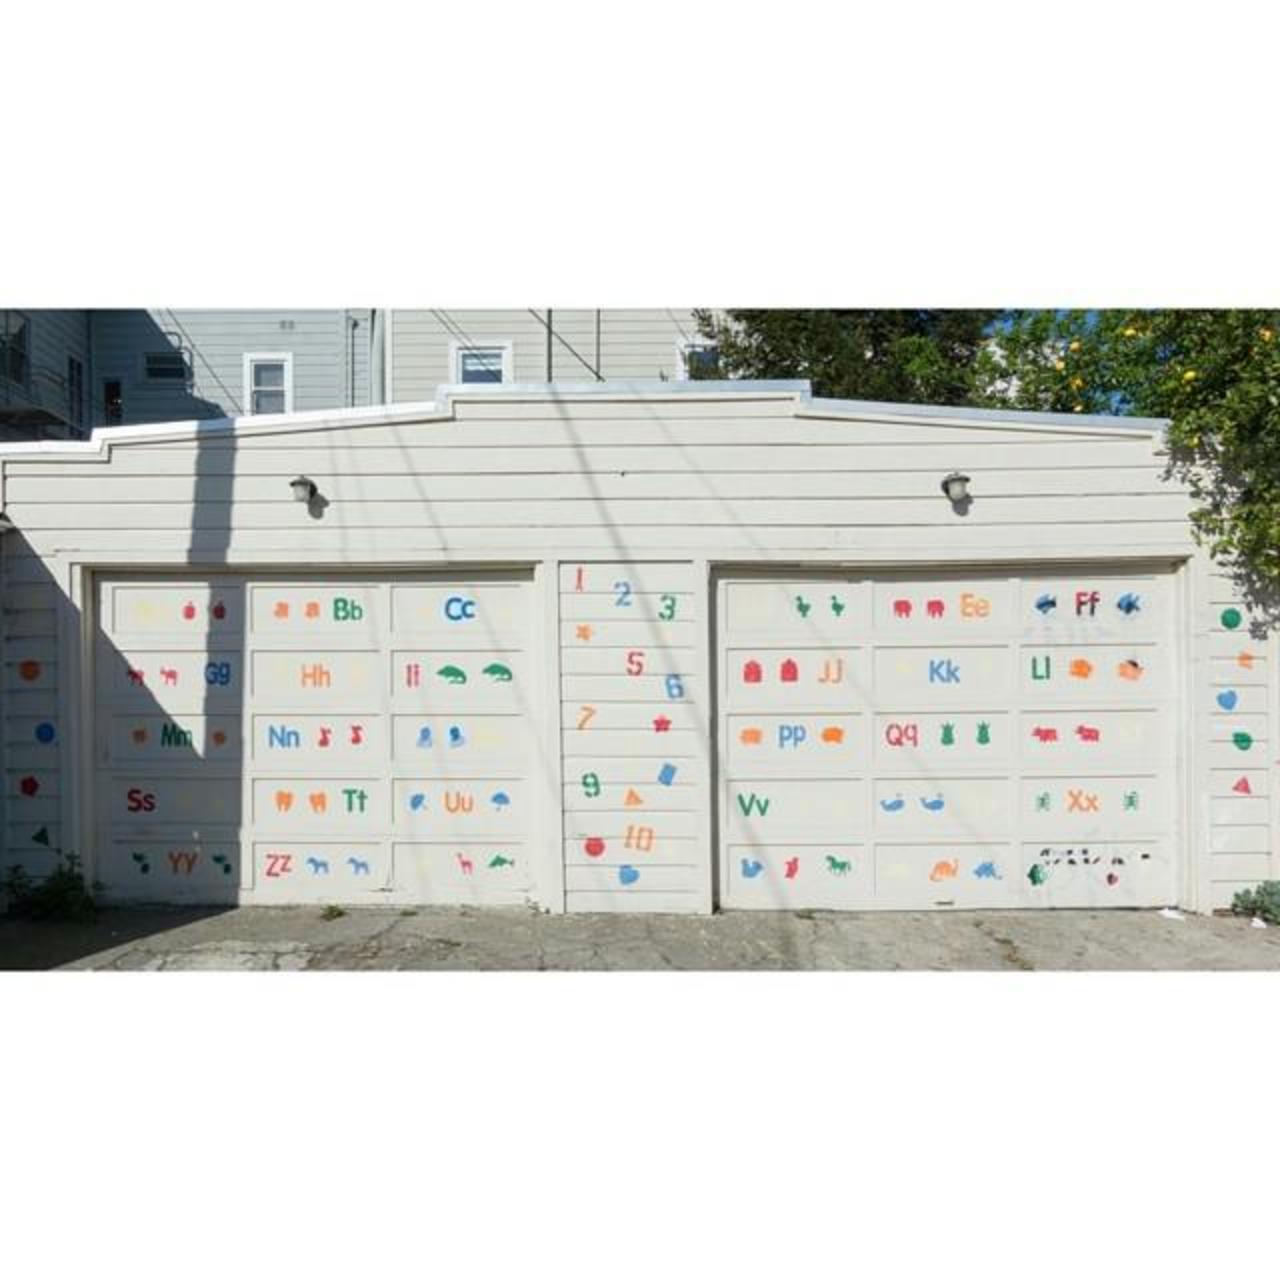 Garage belongs to a school on #osagealley #sfgraffiti #graffiti #bayareagraffiti #sf #streetartsf #sprayart #art #s… http://t.co/7Zu0fY8lUb